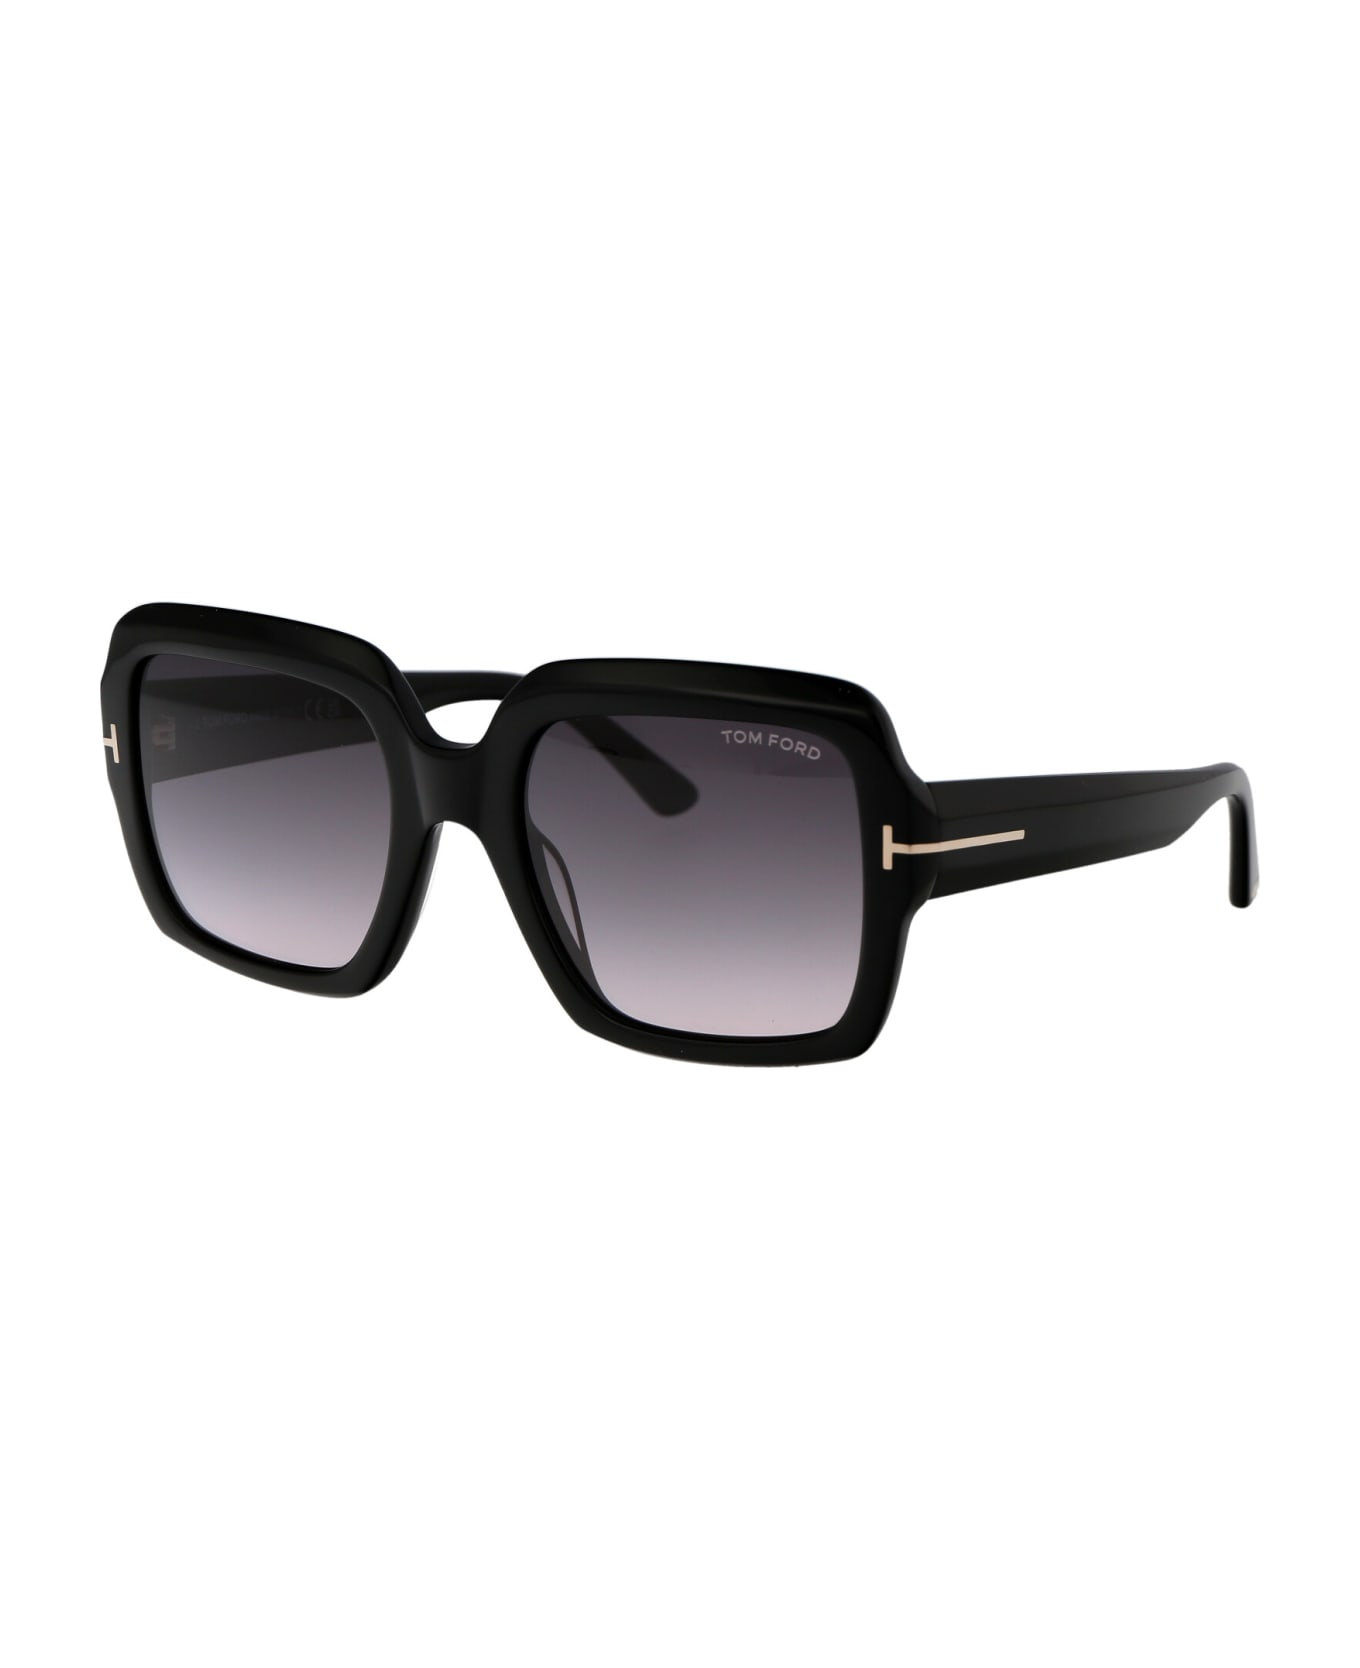 Tom Ford Eyewear Kaya Sunglasses - 01B Nero Lucido / Fumo Grad サングラス